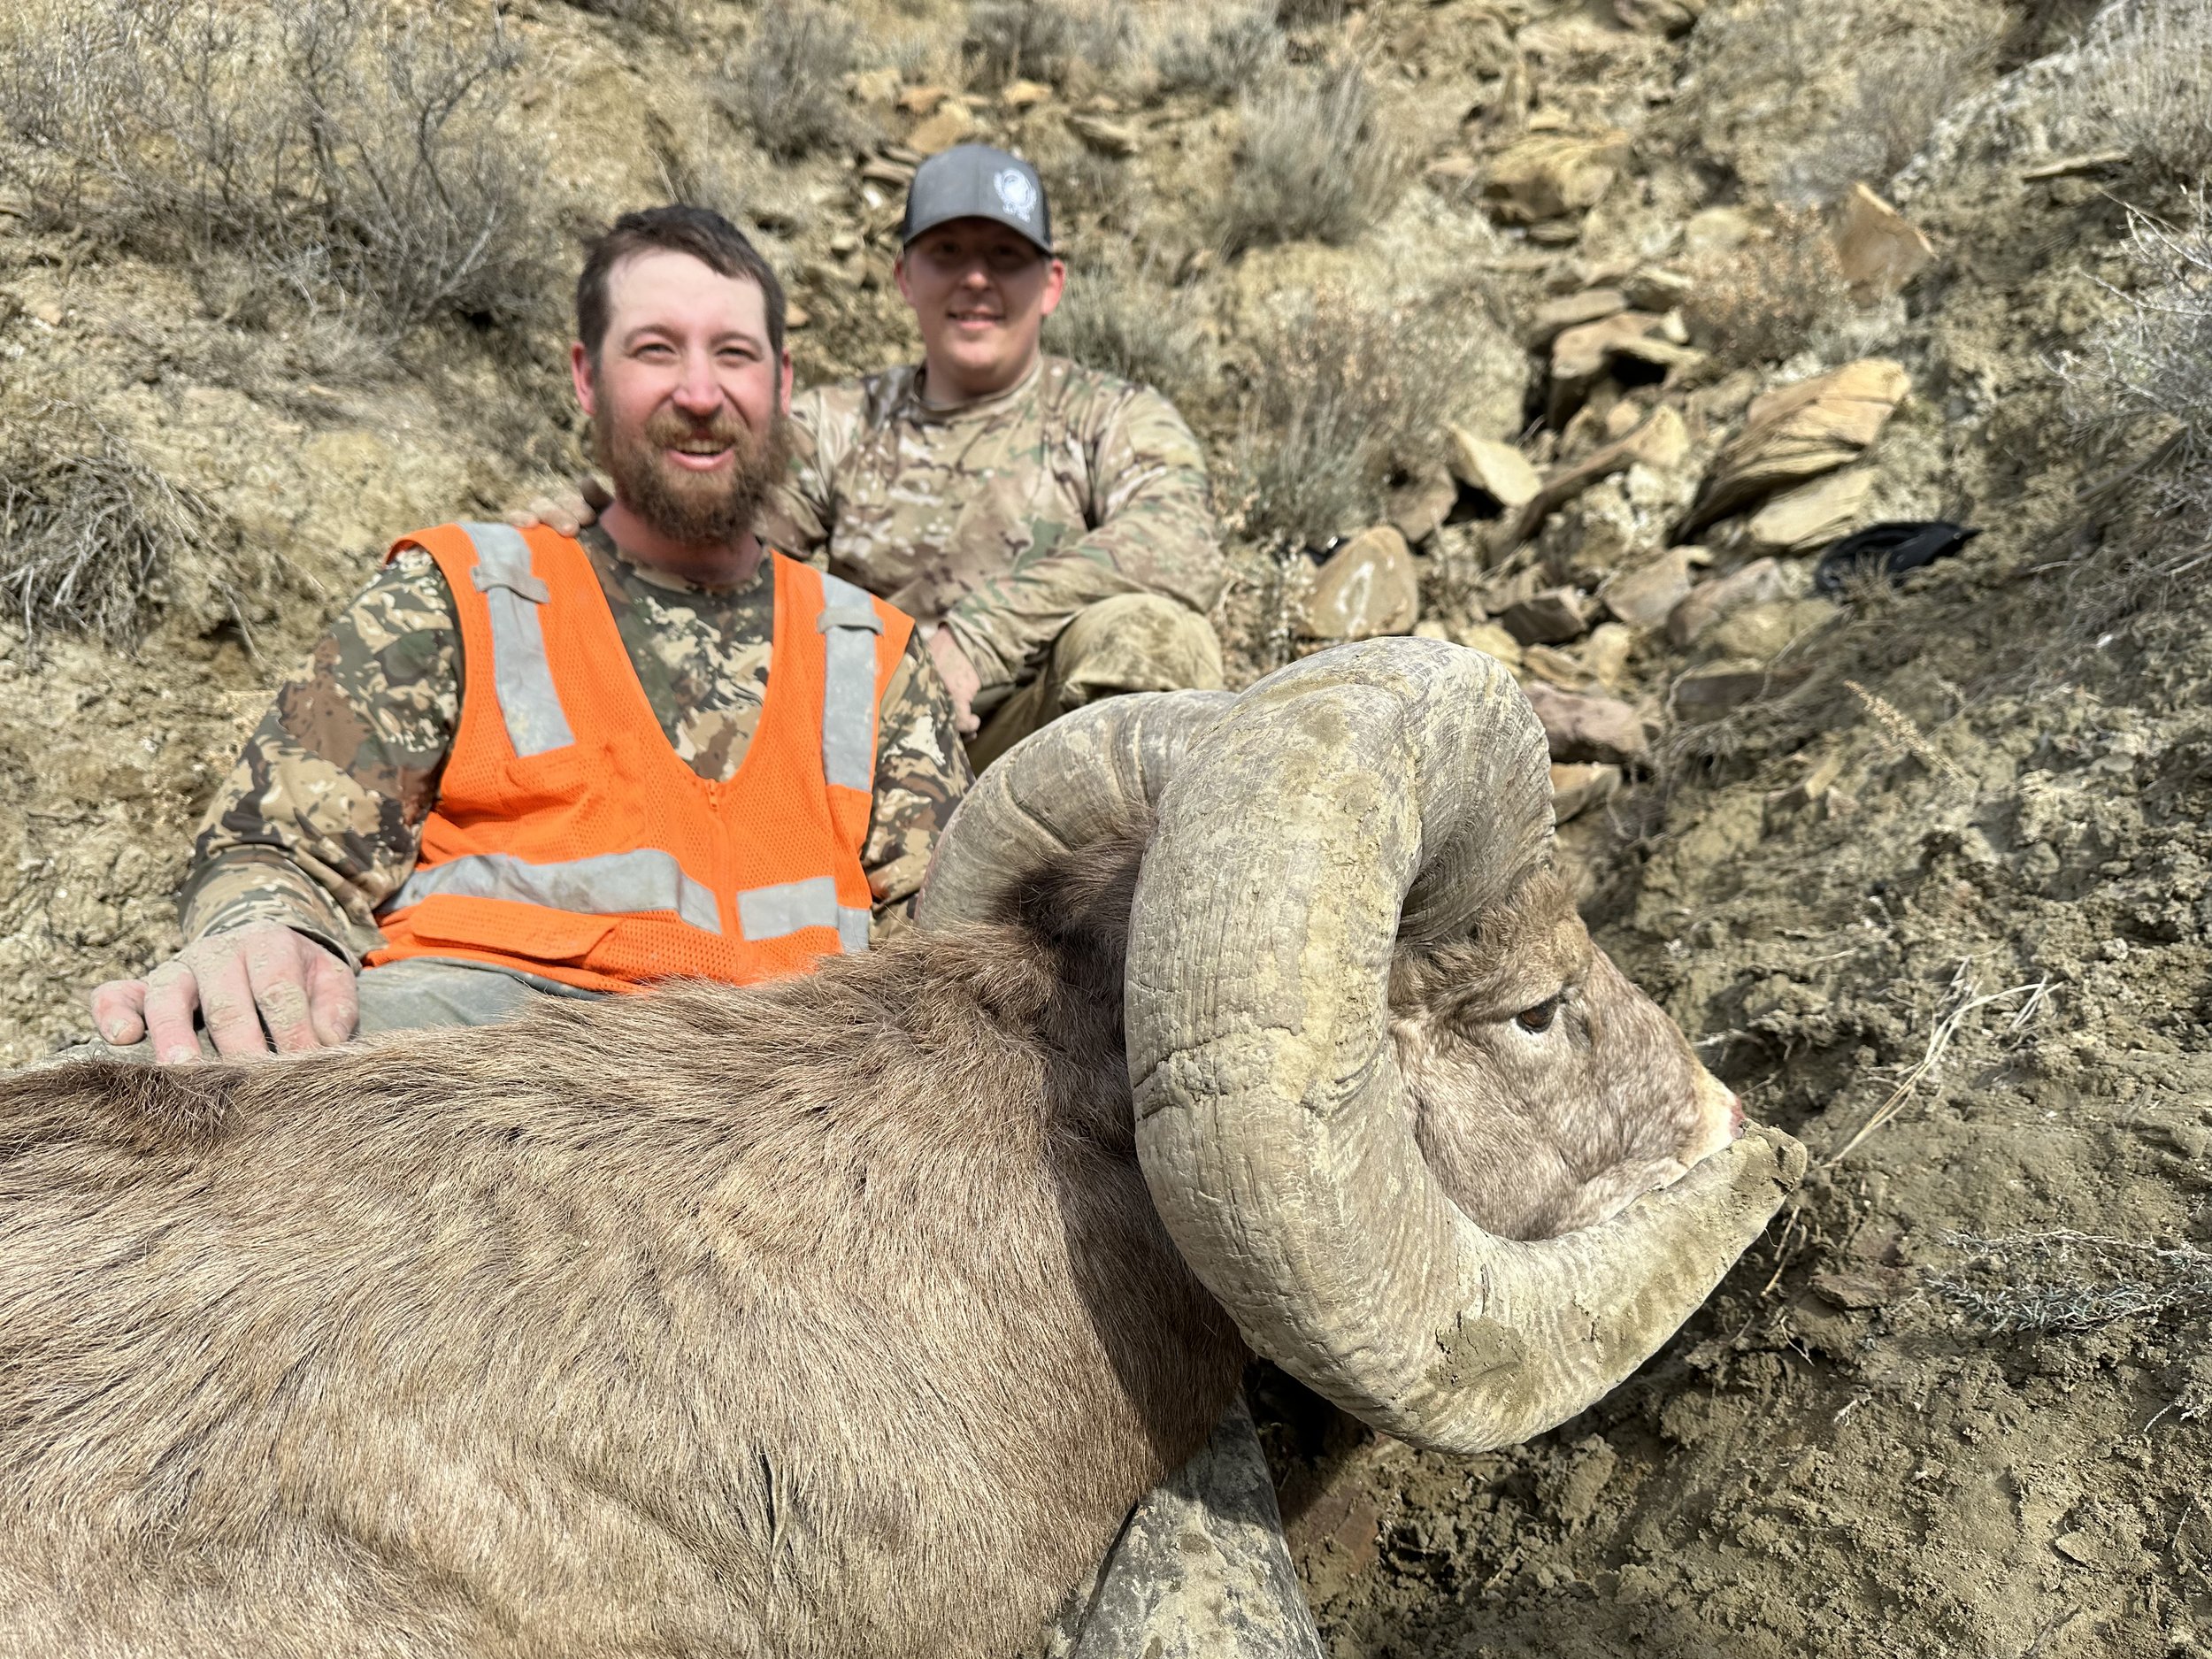 Tyrel and his Dad Bighorn Sheep Montana — Home